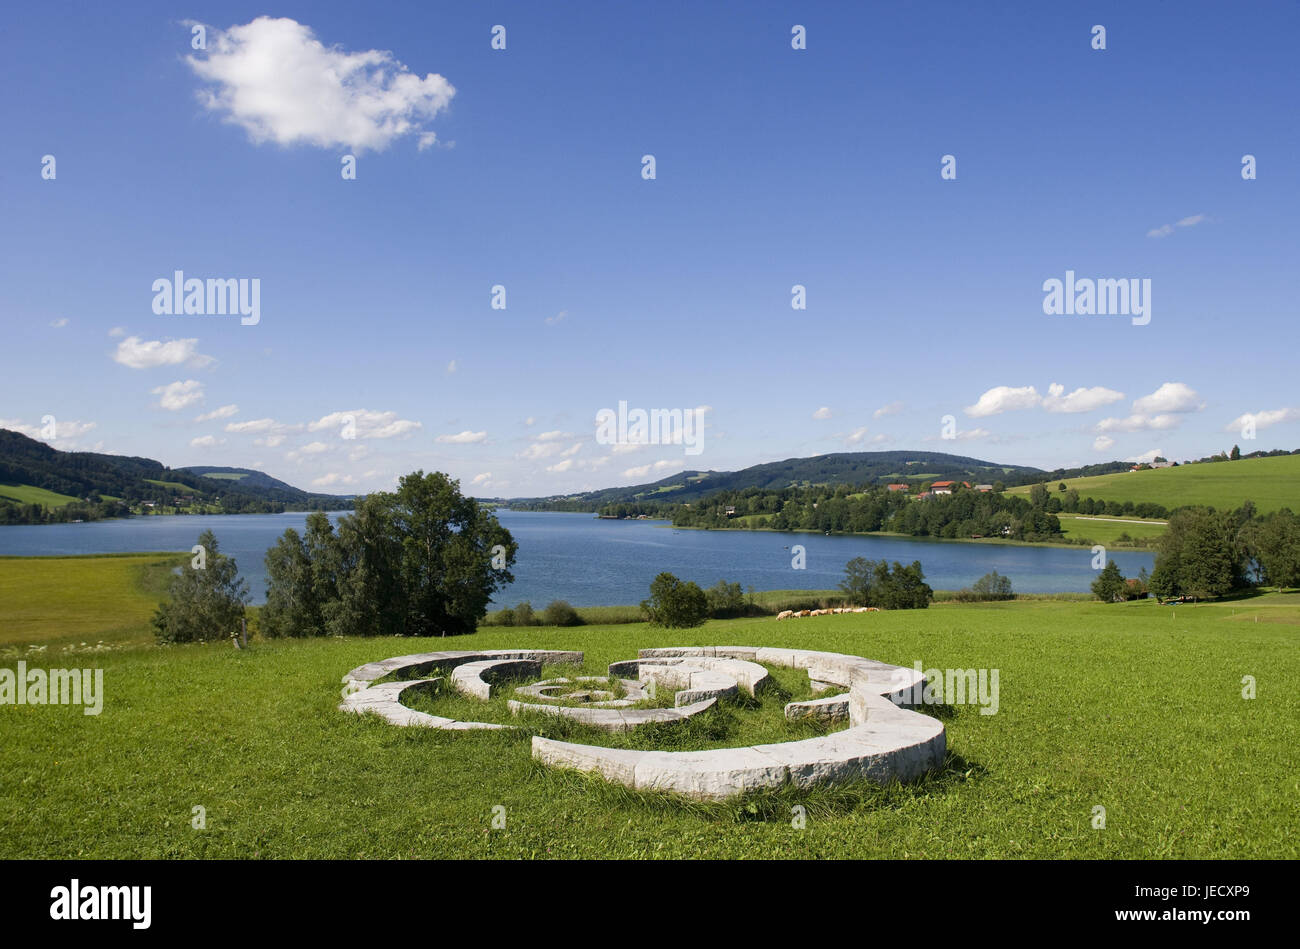 Austria, salt chamber property, crazy lake, stone sculpture, force space, Stock Photo